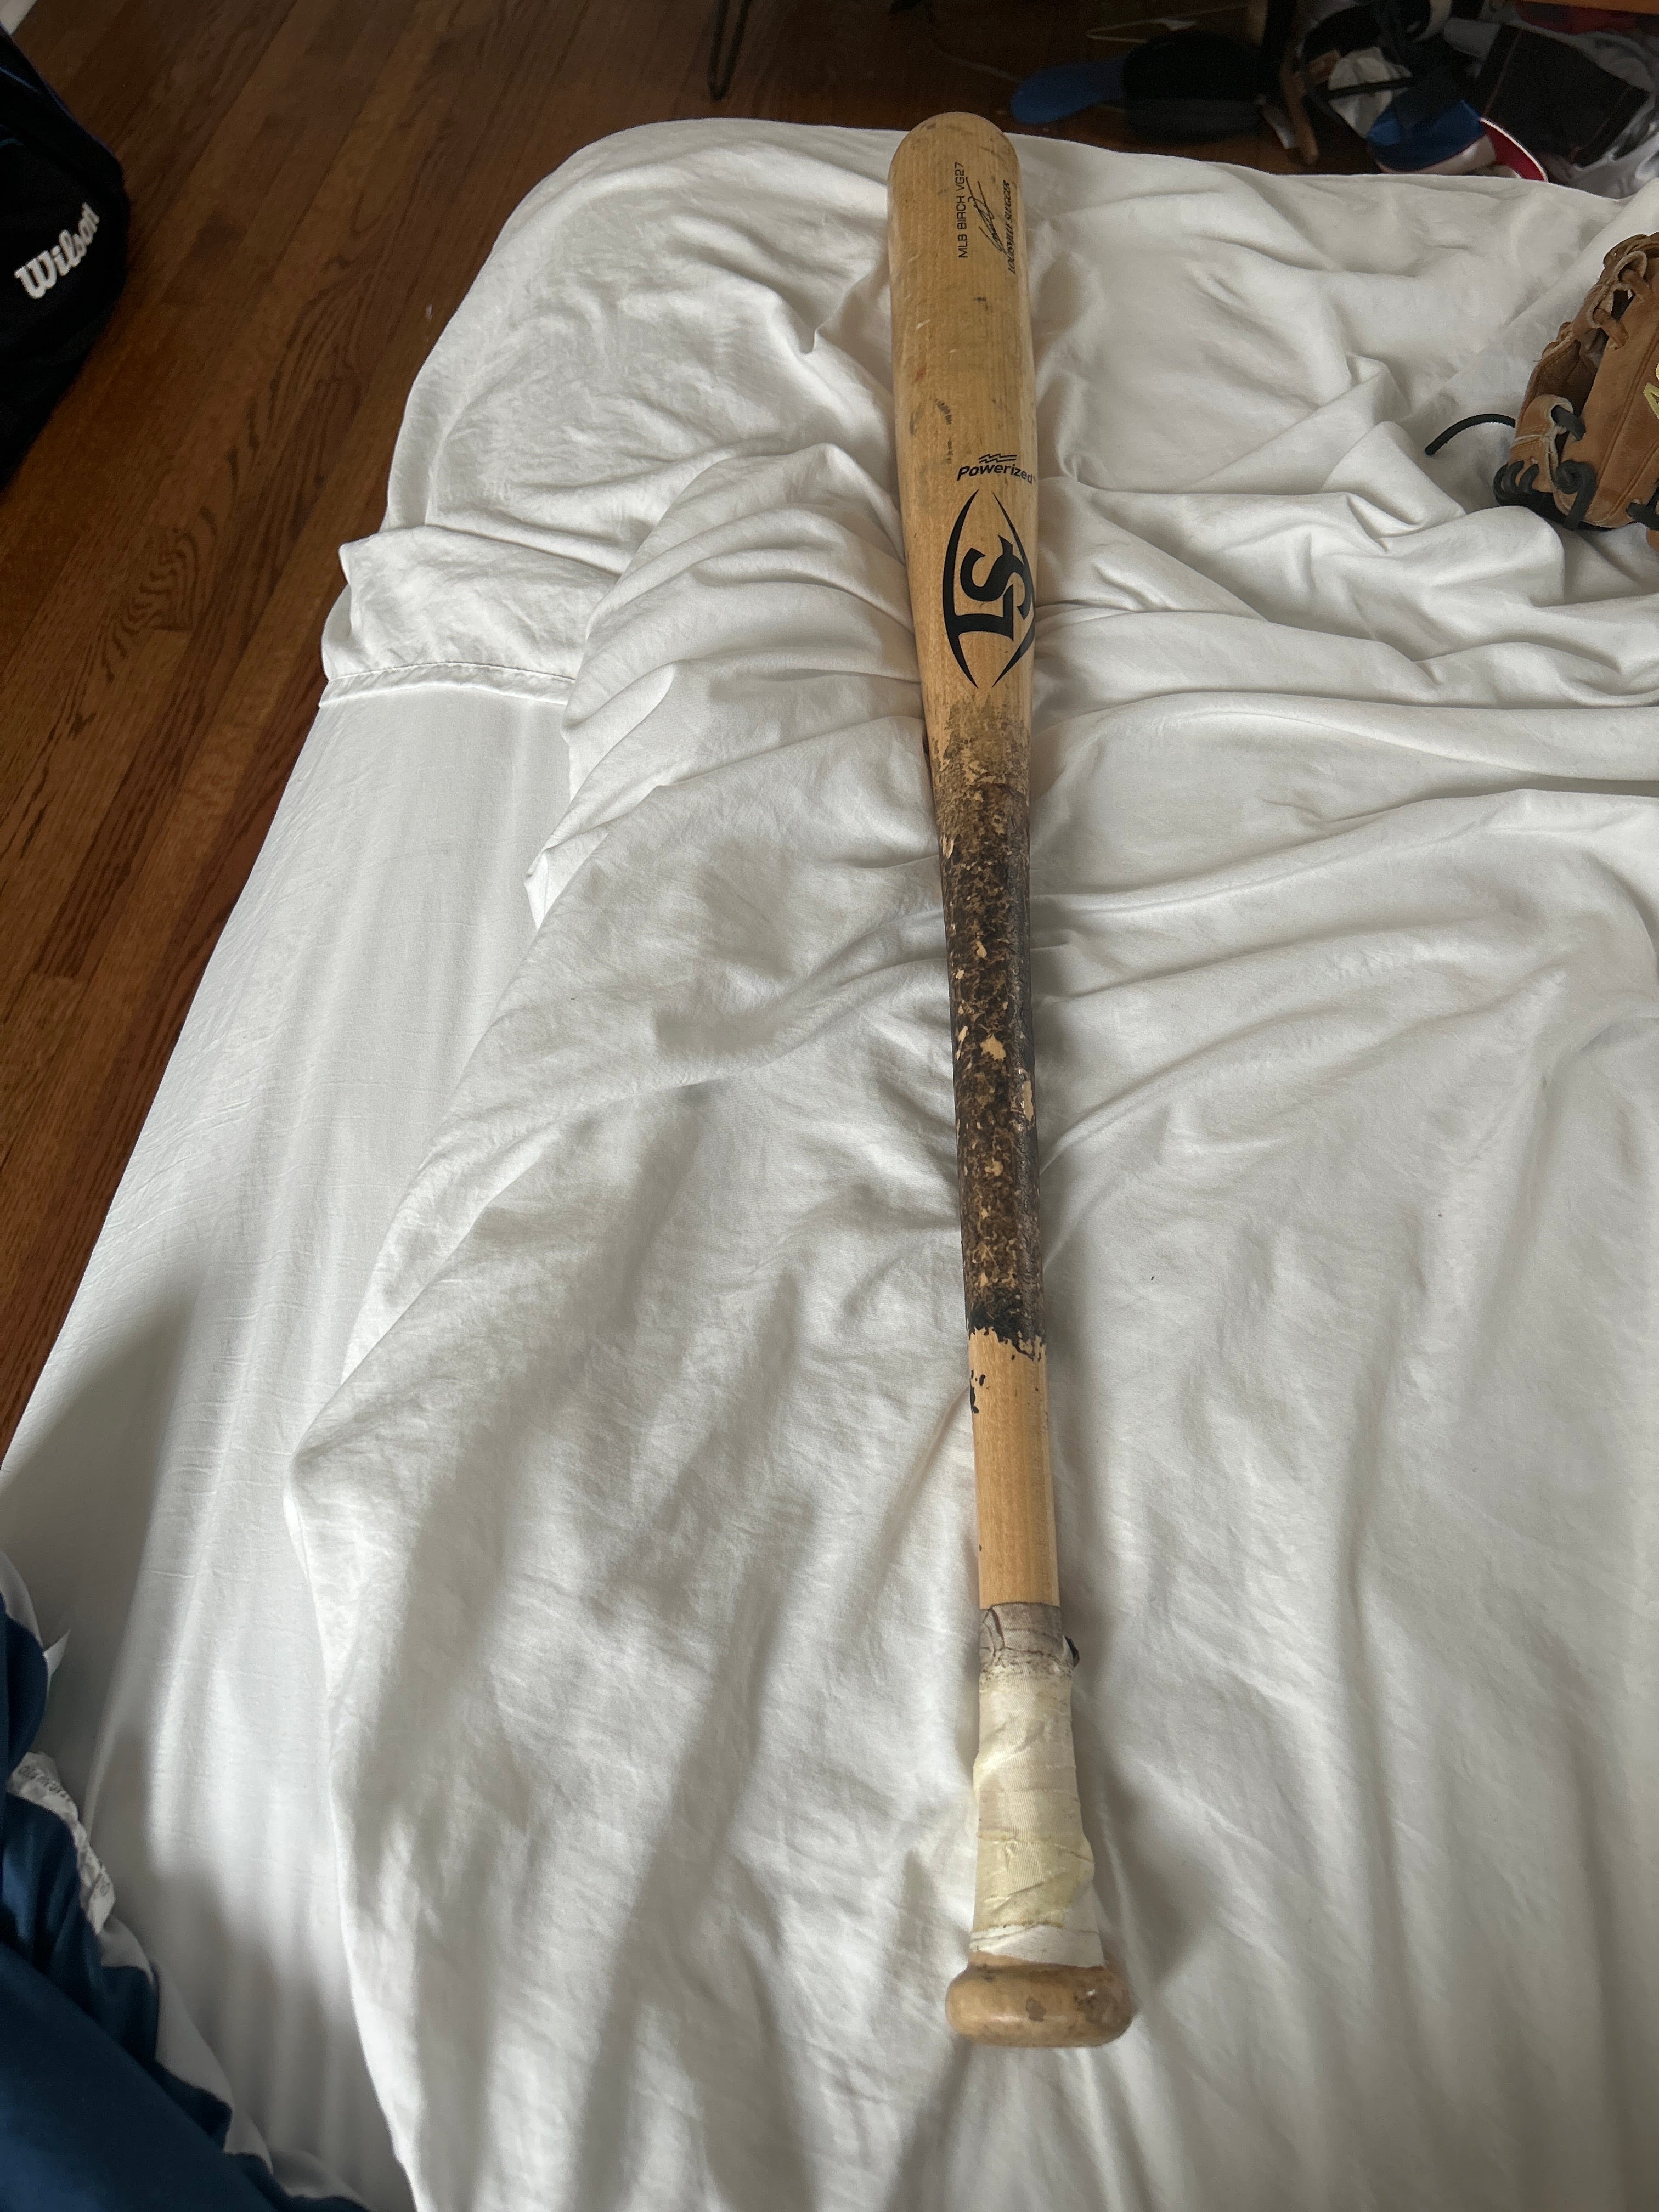 Wood (-3) 29.5 oz 32 MLB Prime Maple Bat